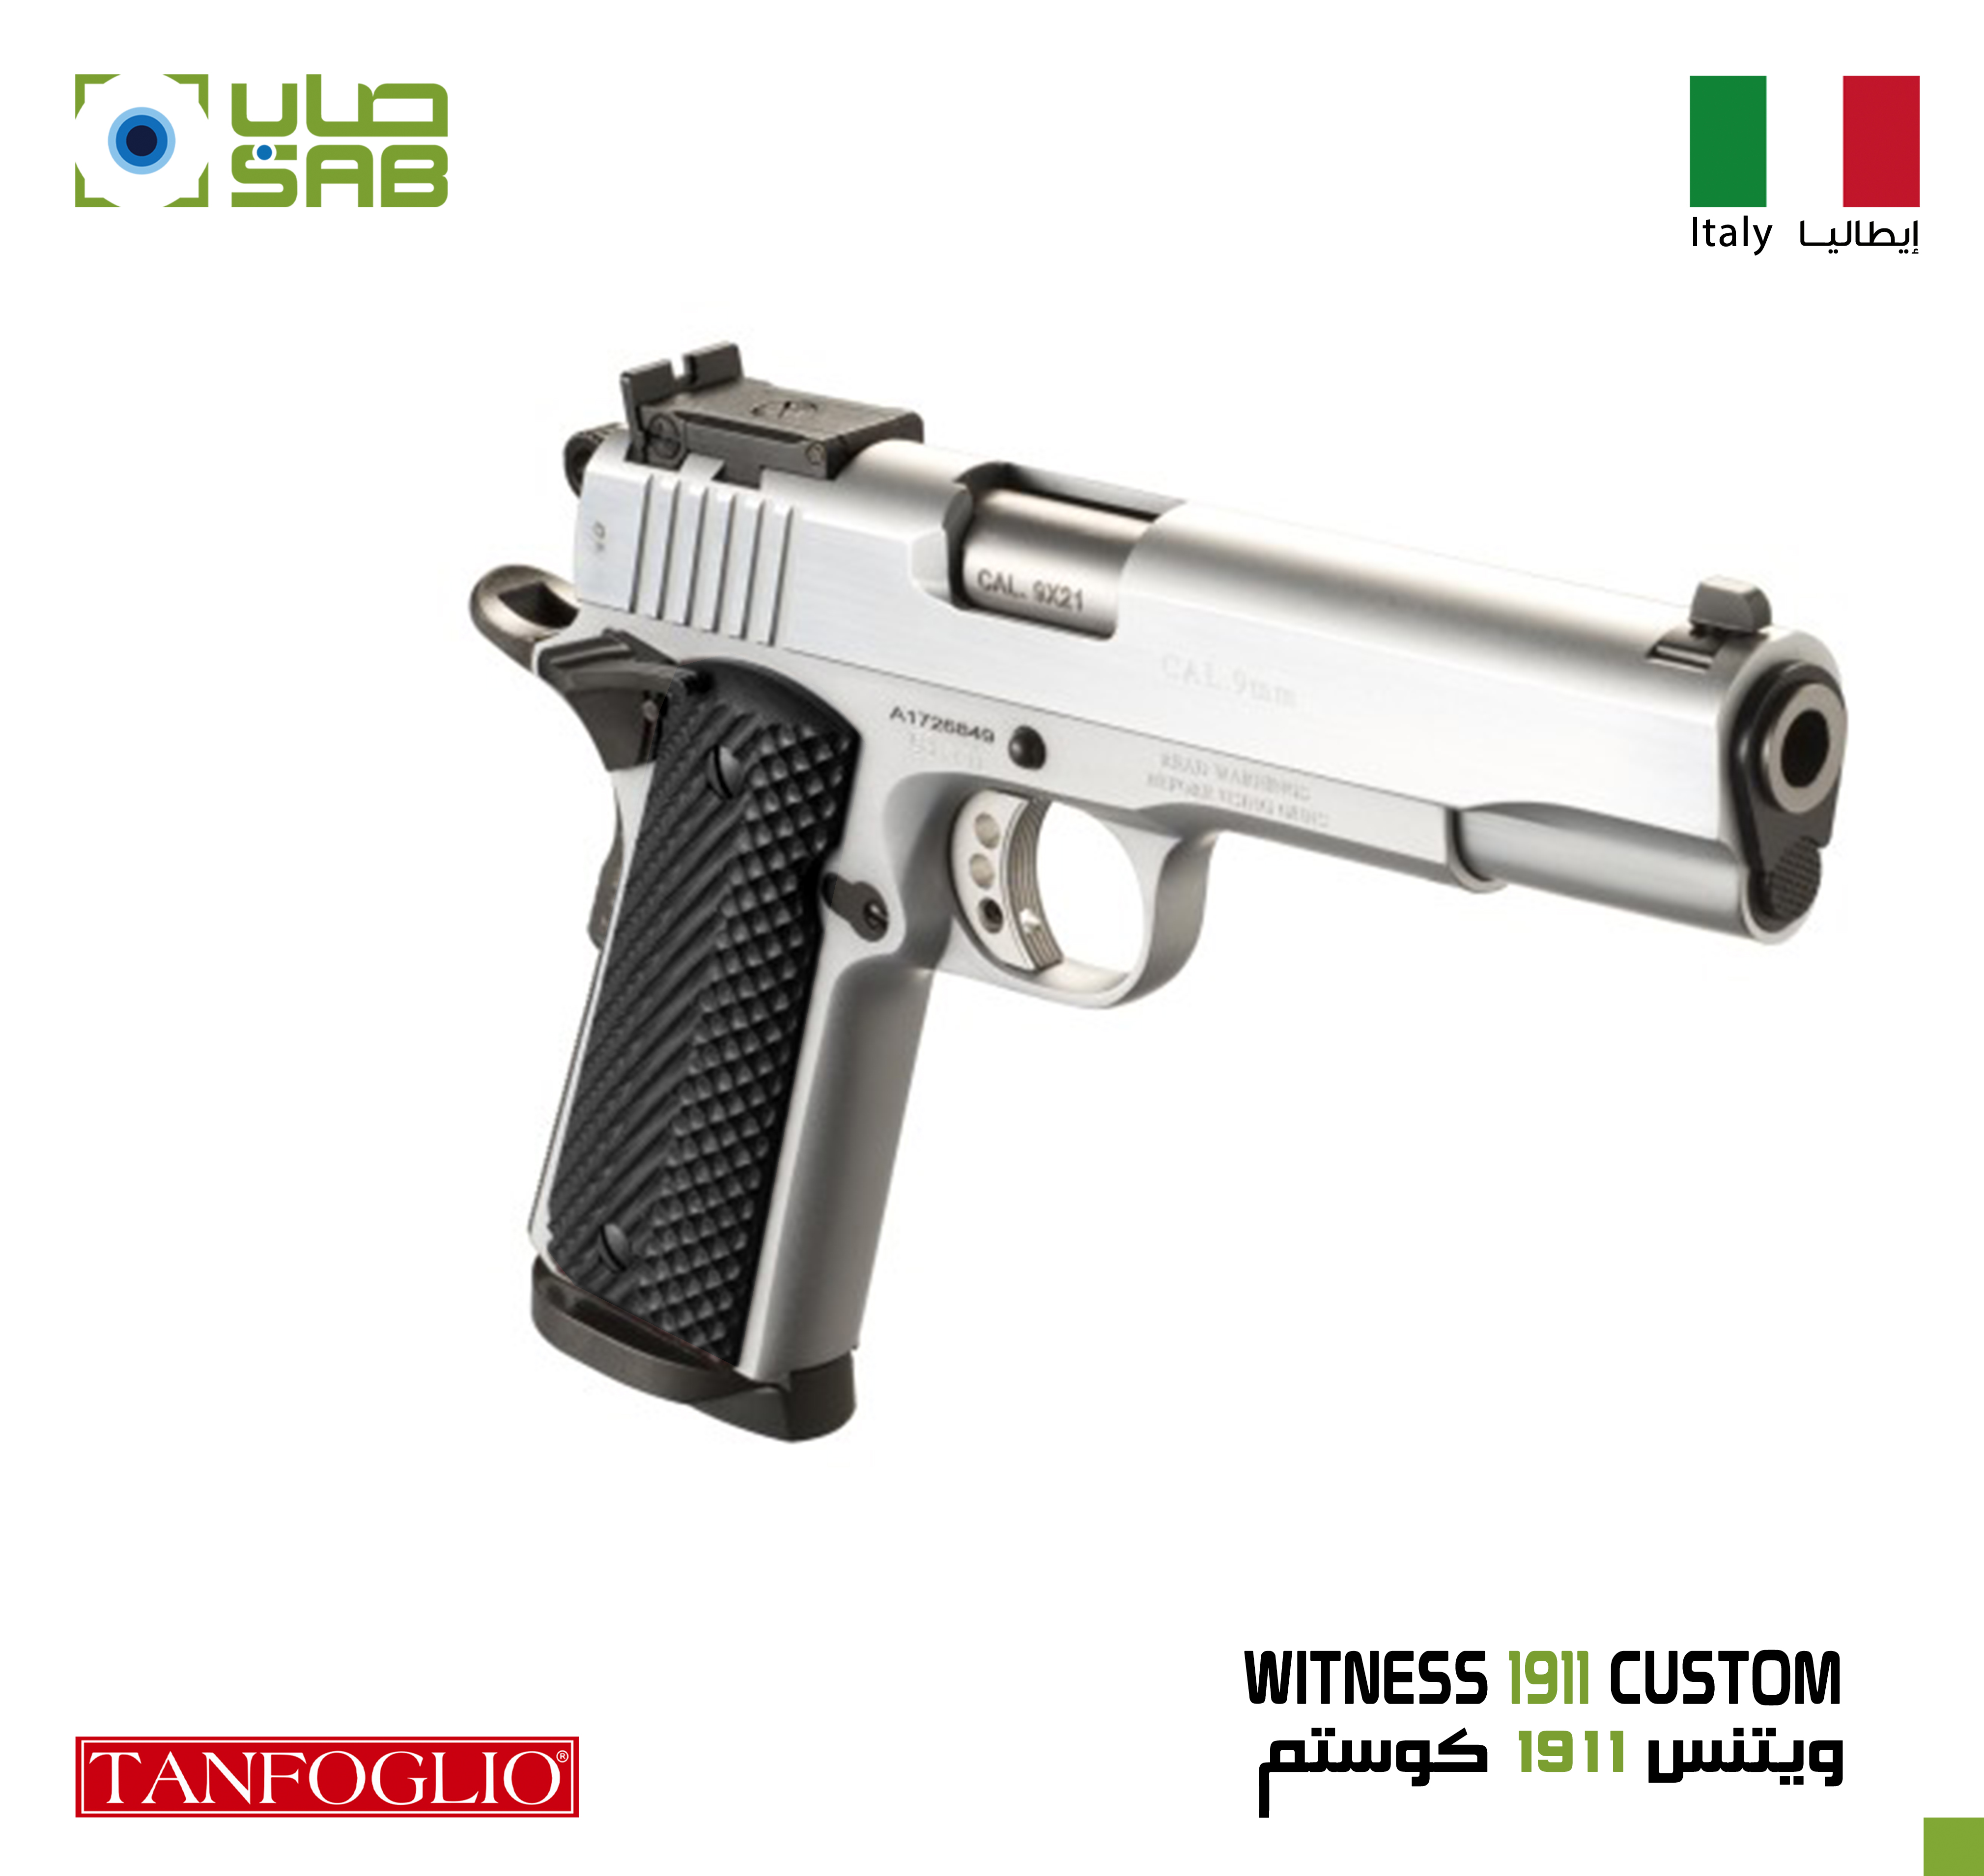  9mm - Tanfoglio - FT 1911 CUSTOM SILVER